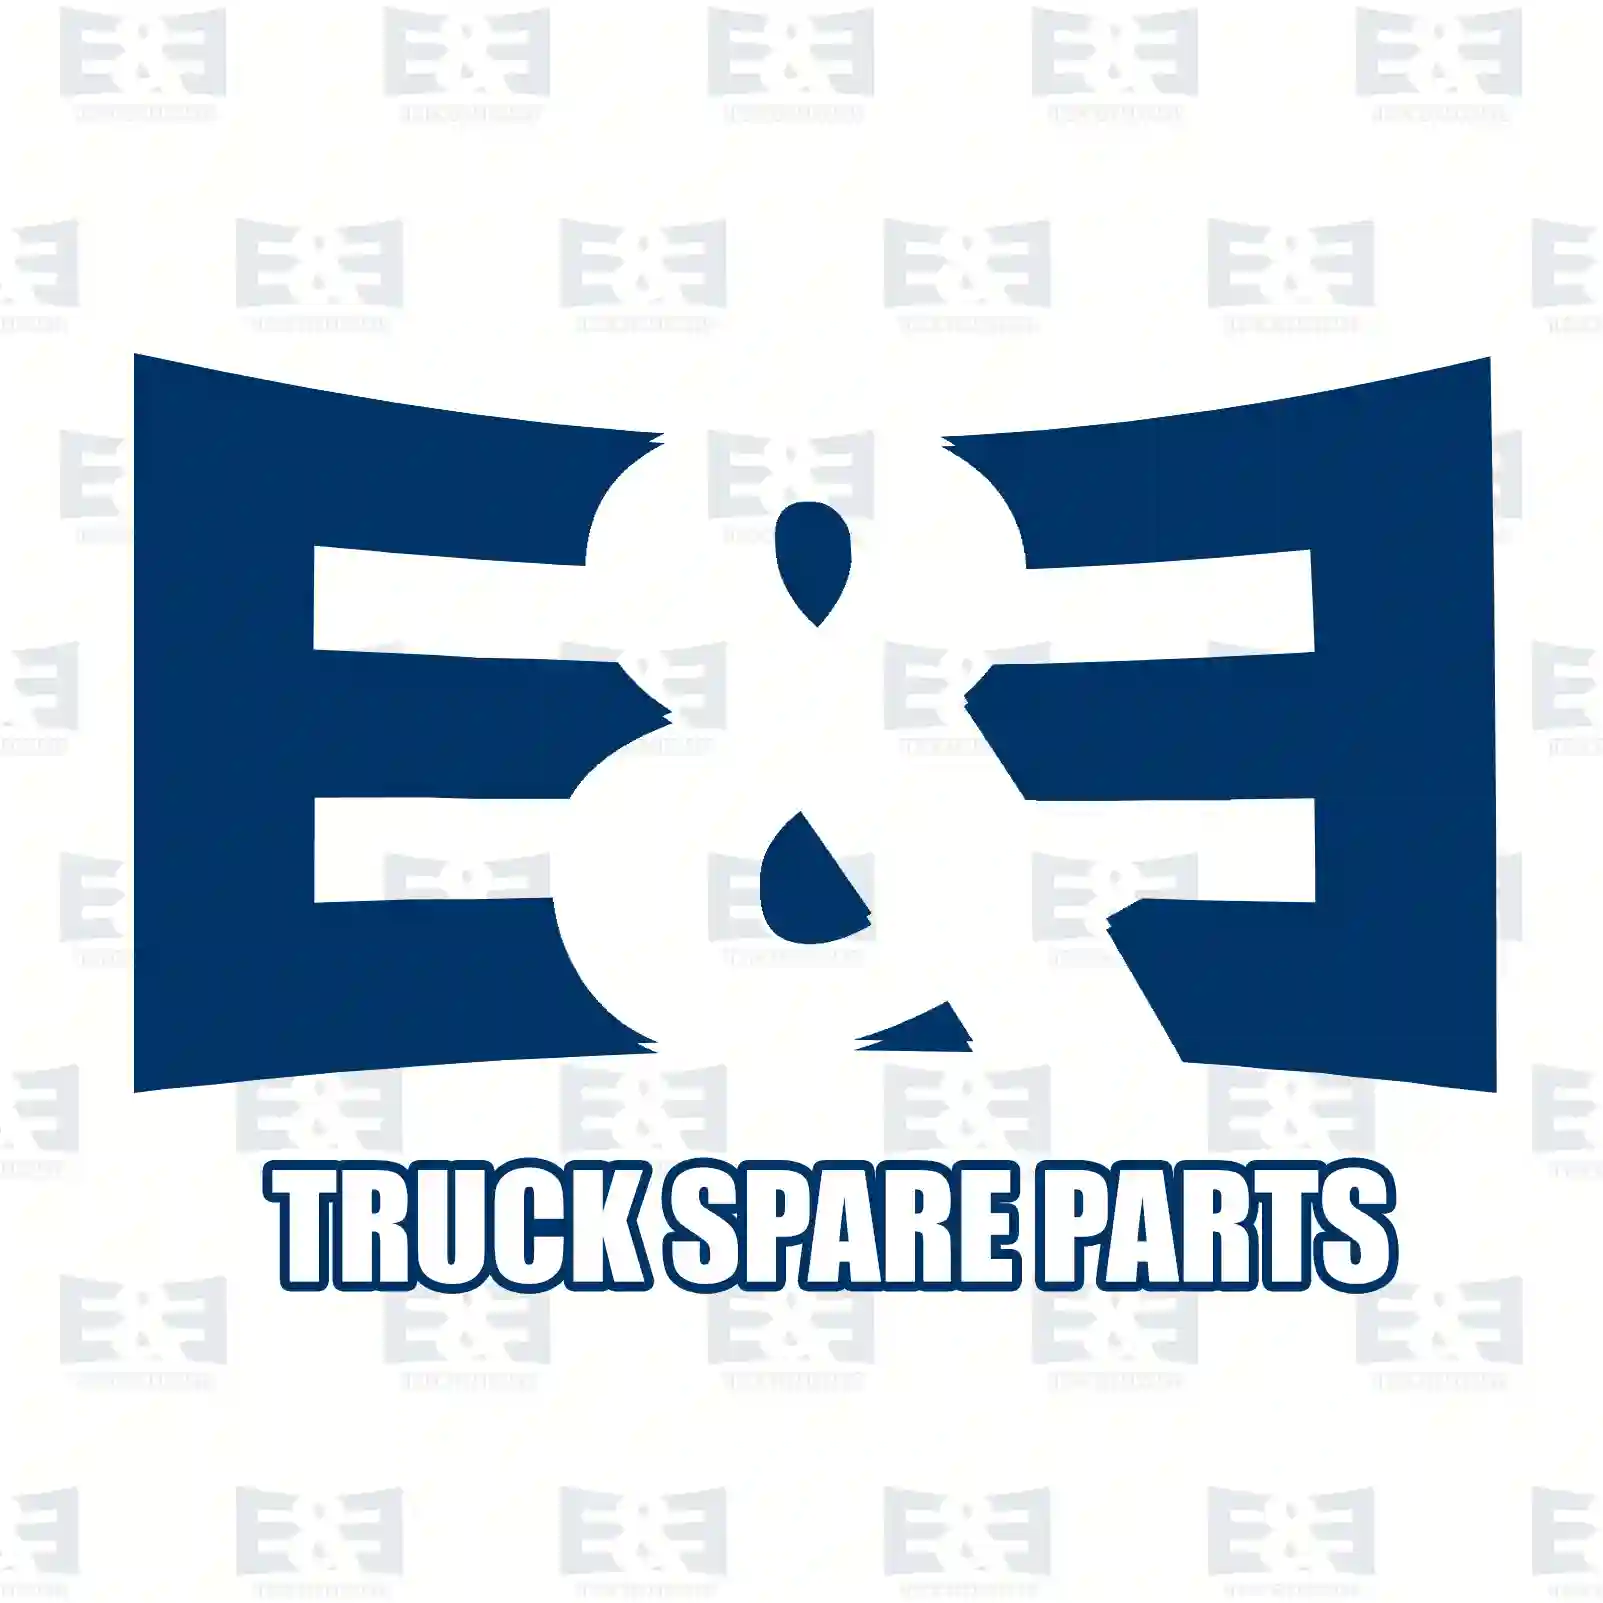 Synchronizer kit, 2E2278786, 1669360 ||  2E2278786 E&E Truck Spare Parts | Truck Spare Parts, Auotomotive Spare Parts Synchronizer kit, 2E2278786, 1669360 ||  2E2278786 E&E Truck Spare Parts | Truck Spare Parts, Auotomotive Spare Parts